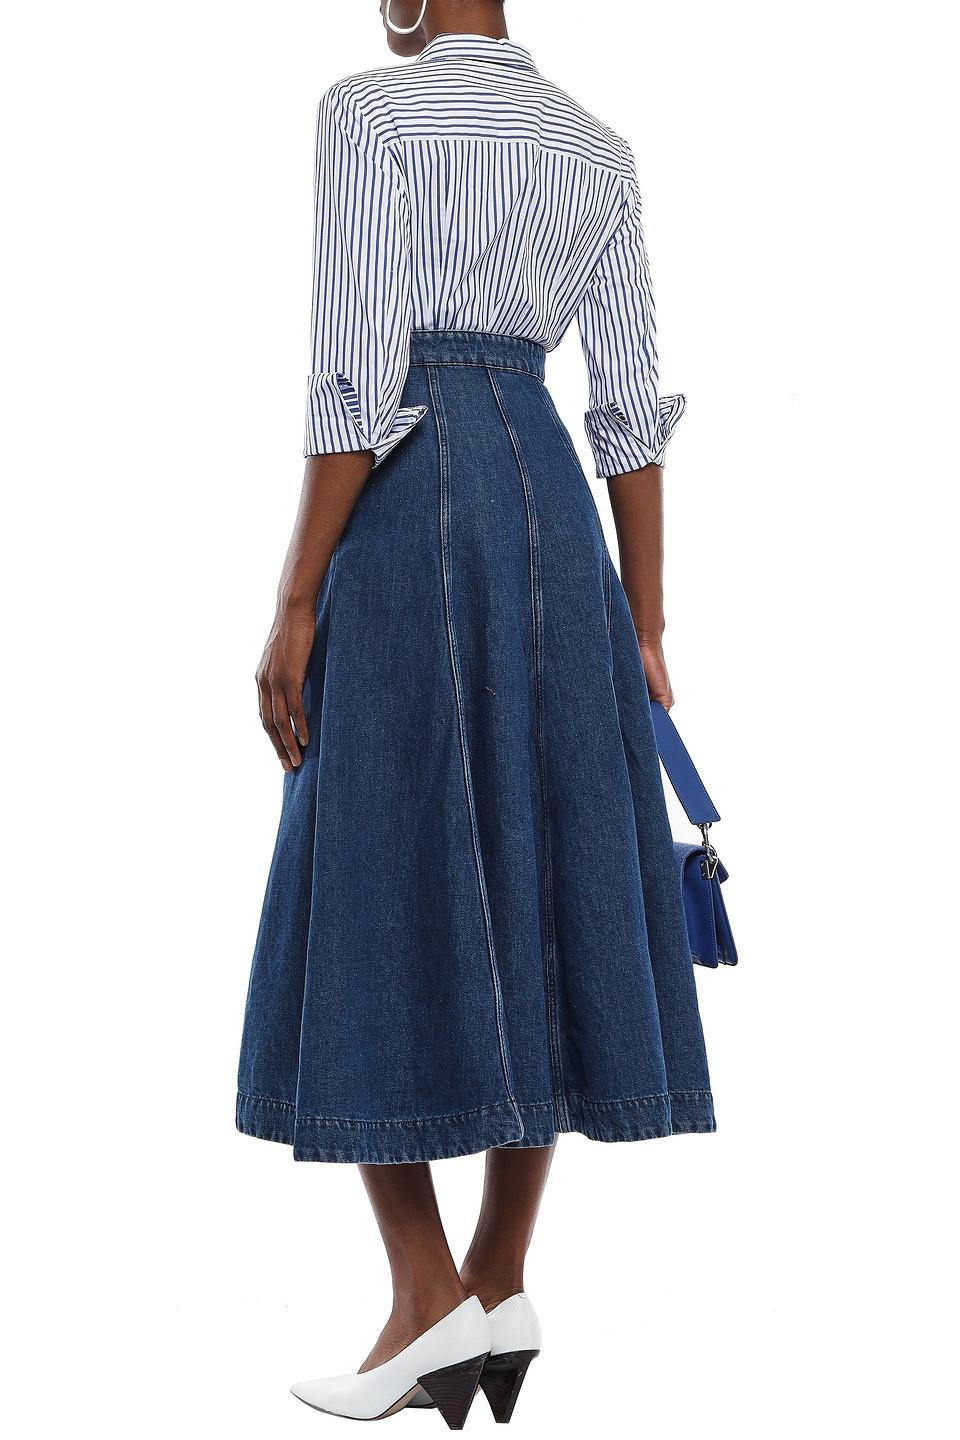 Acne Studios Flared Denim Midi Skirt Dark Denim in Blue - Lyst